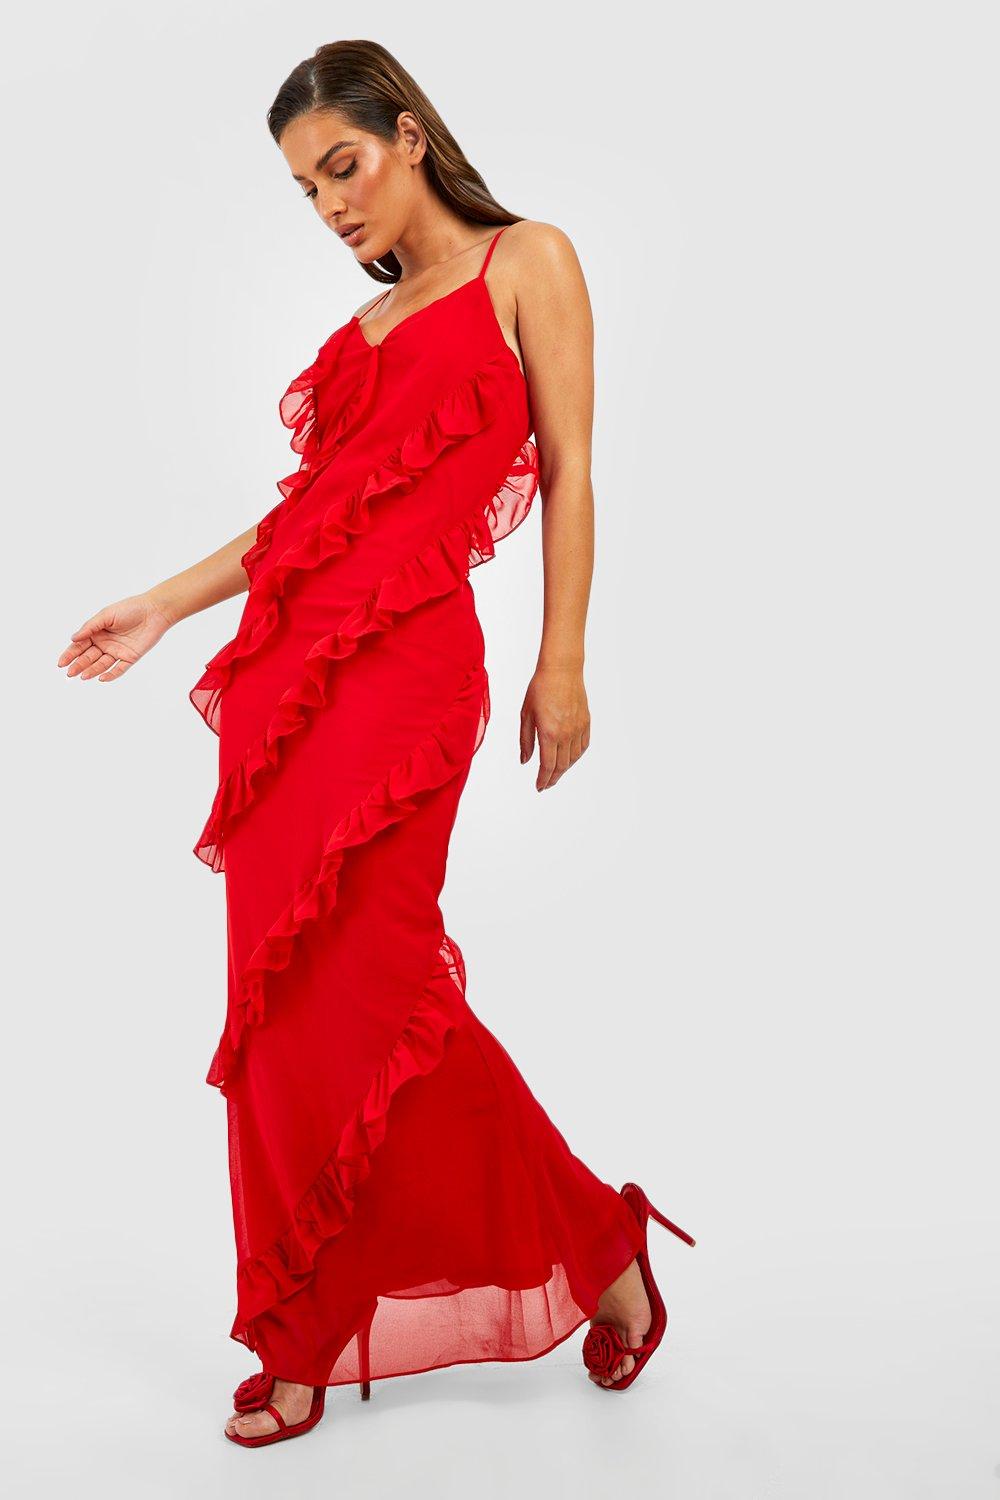 boohoo Chiffon Ruffle Trim Maxi Dress - Red - Size 8